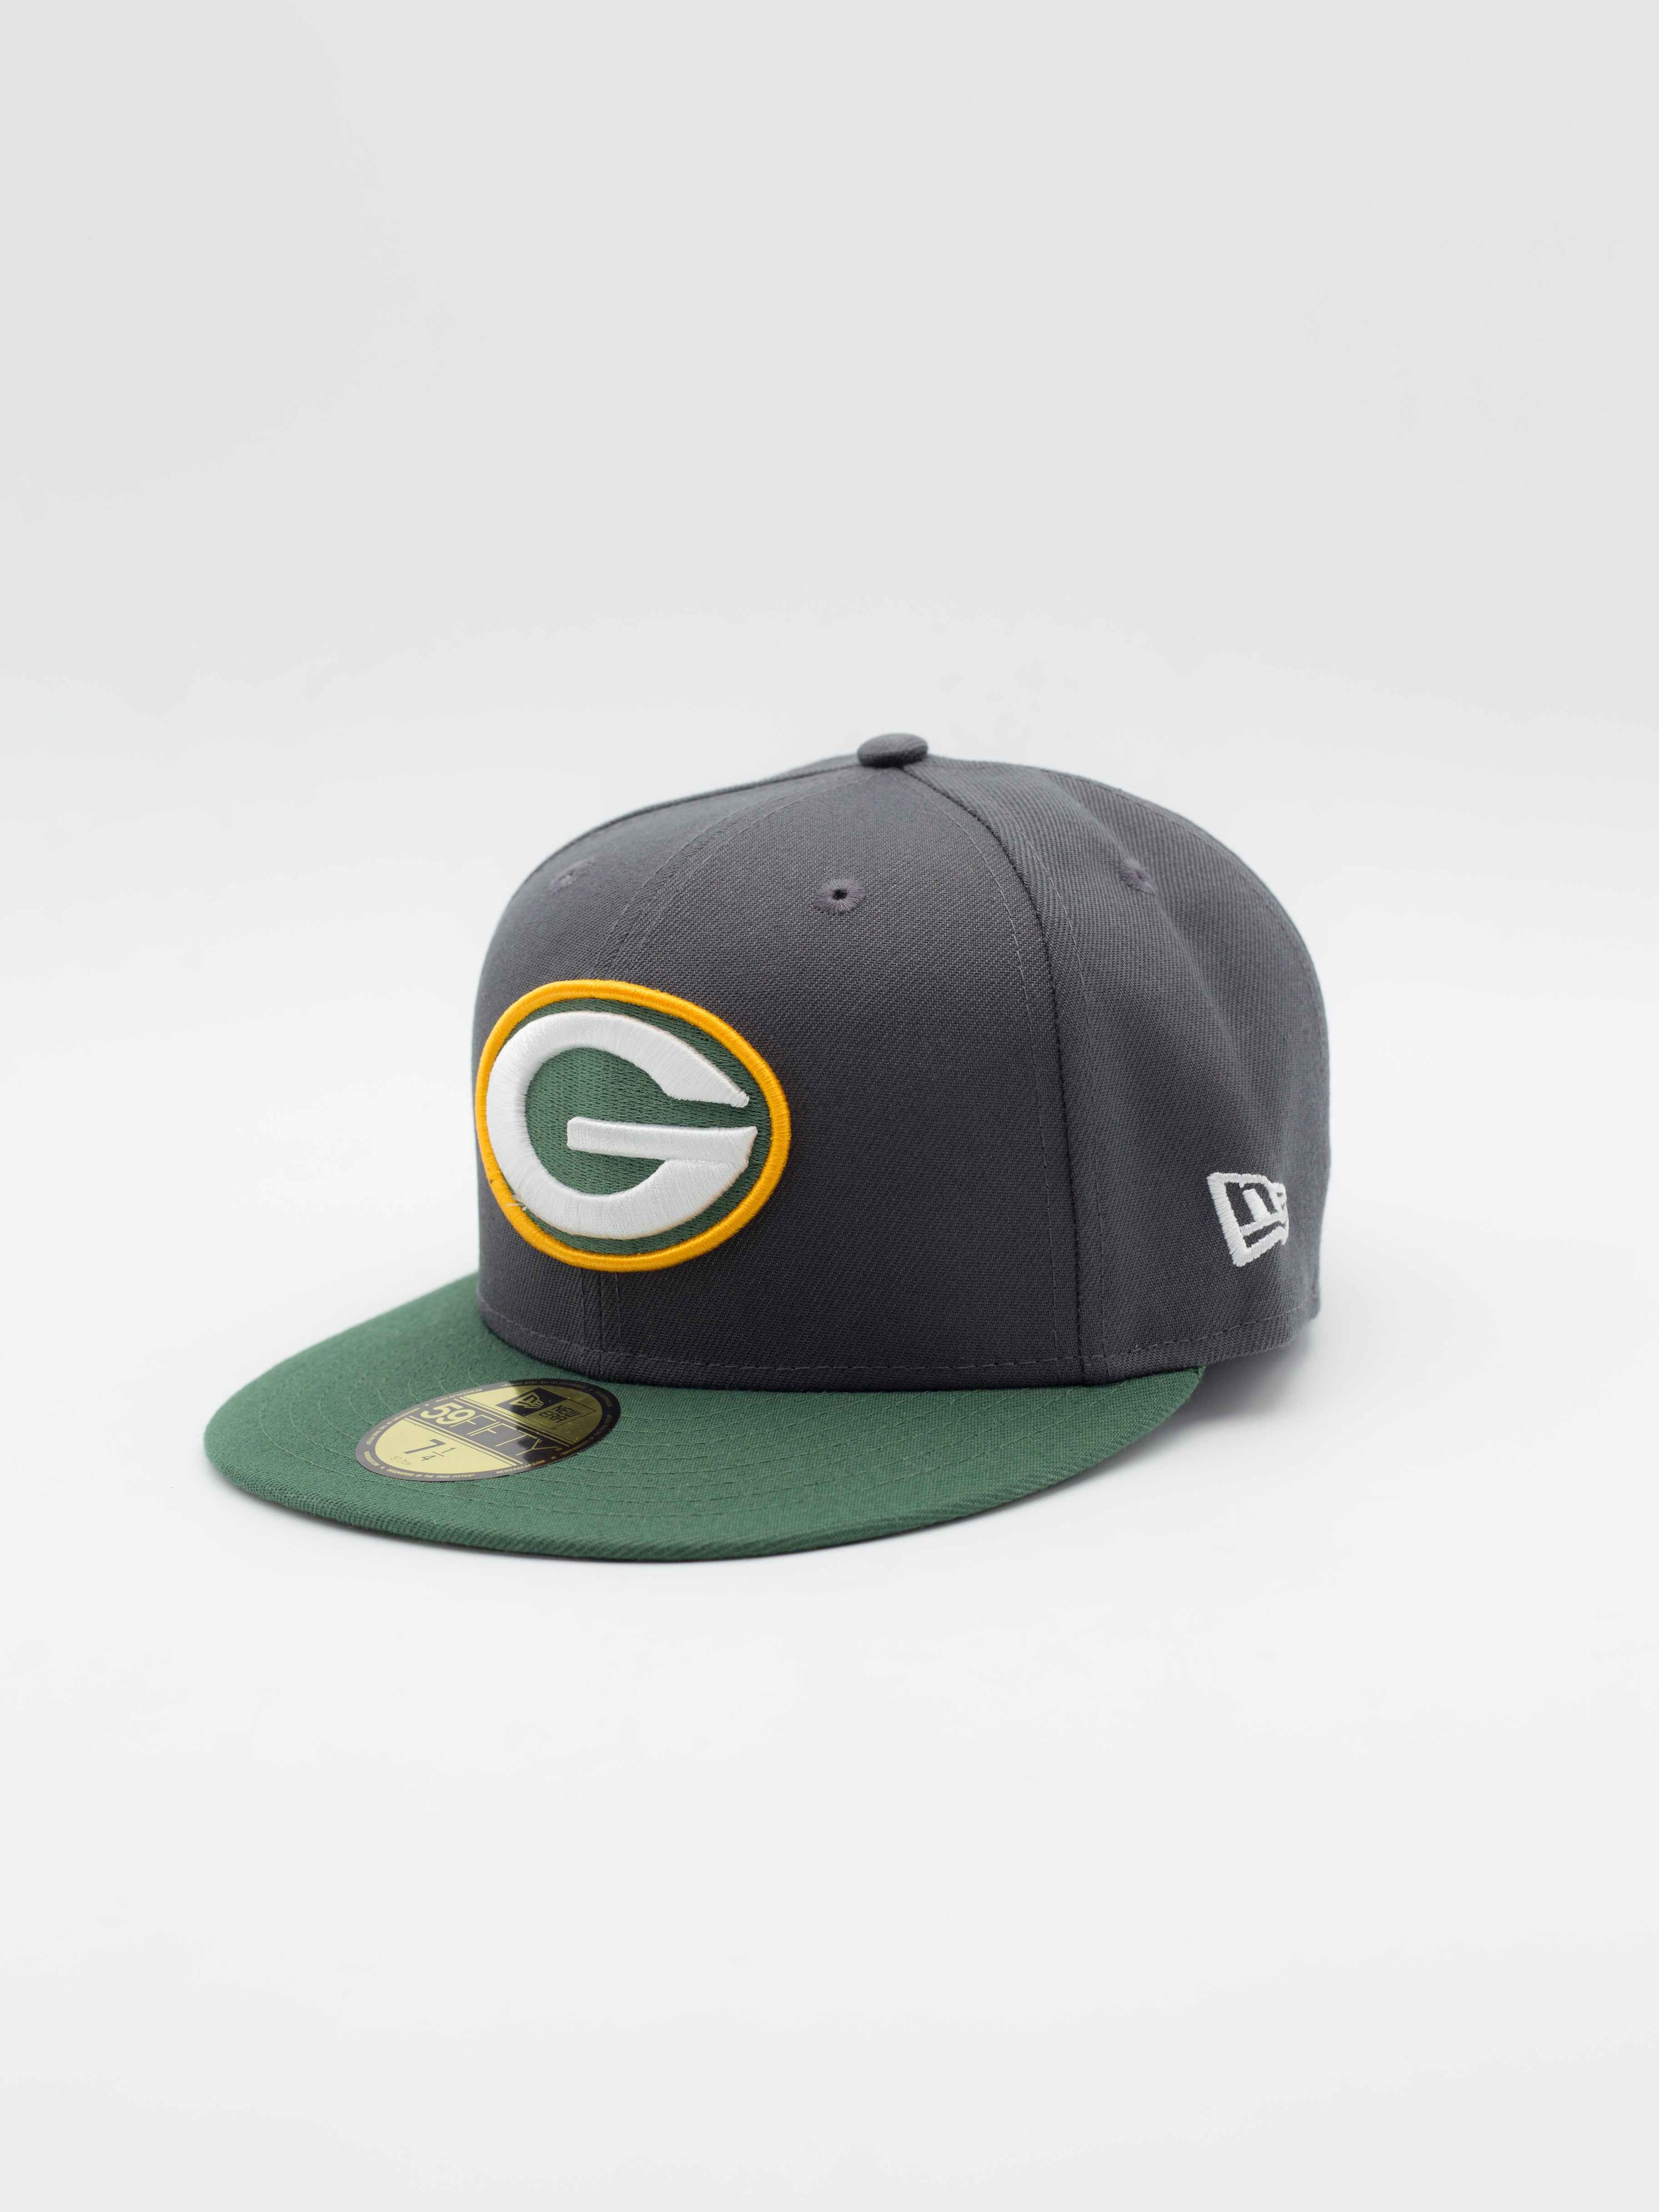 59Fifty Side Patch Green Bay Packers gris - La Tienda de las Gorras